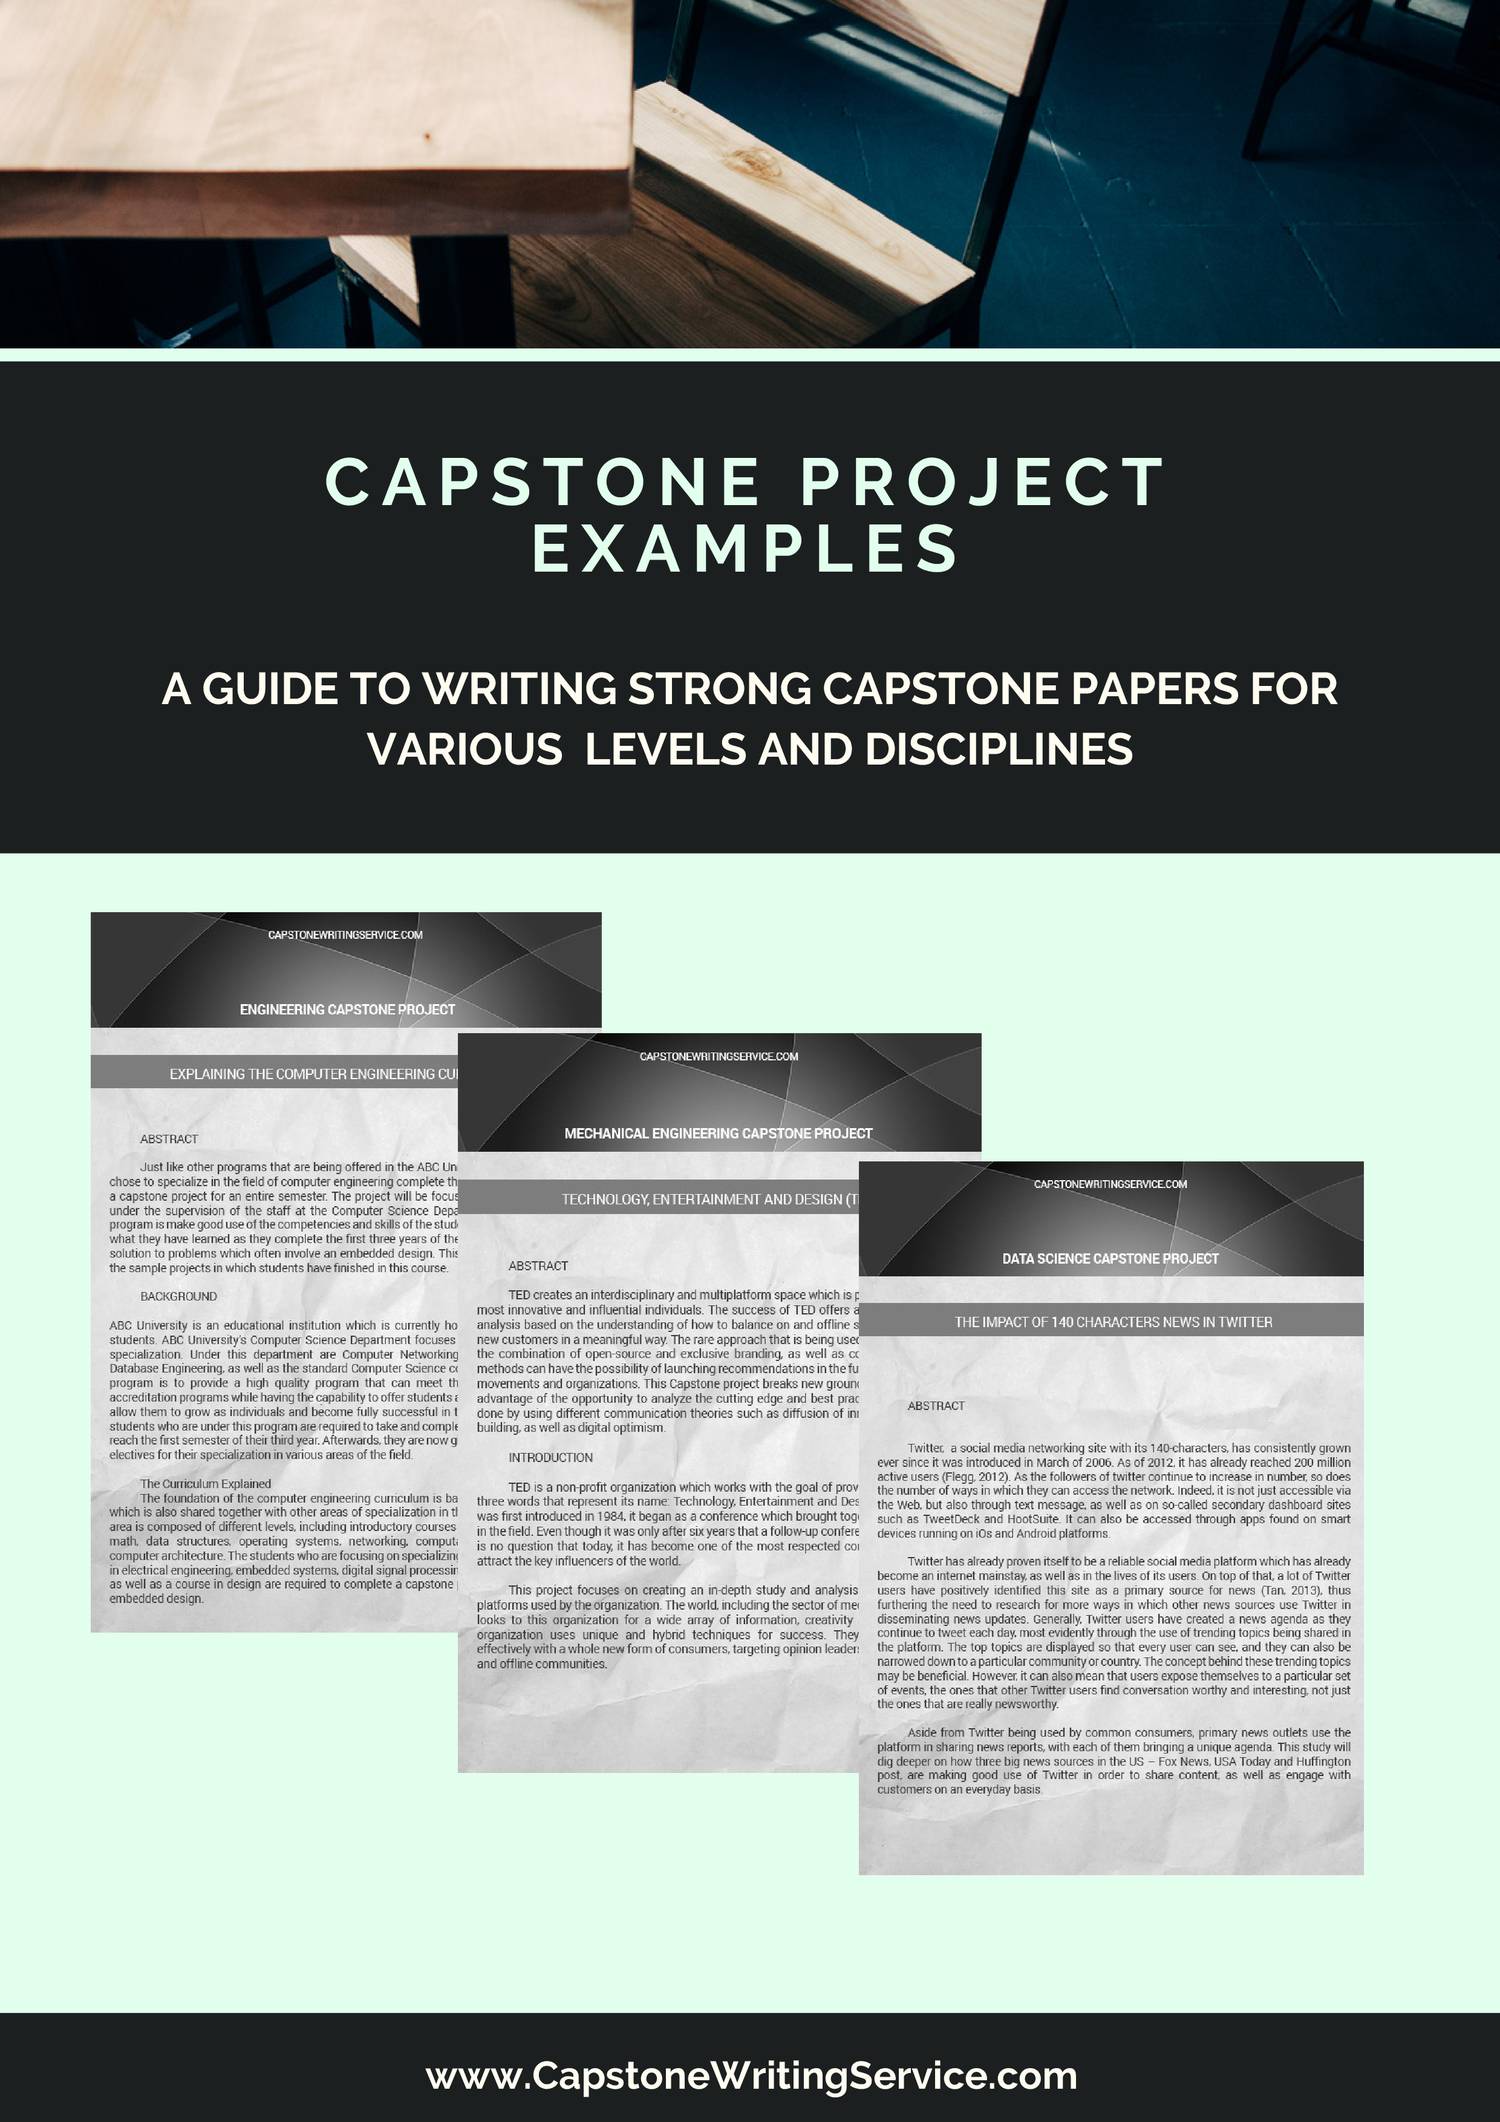 capstone project sample pdf